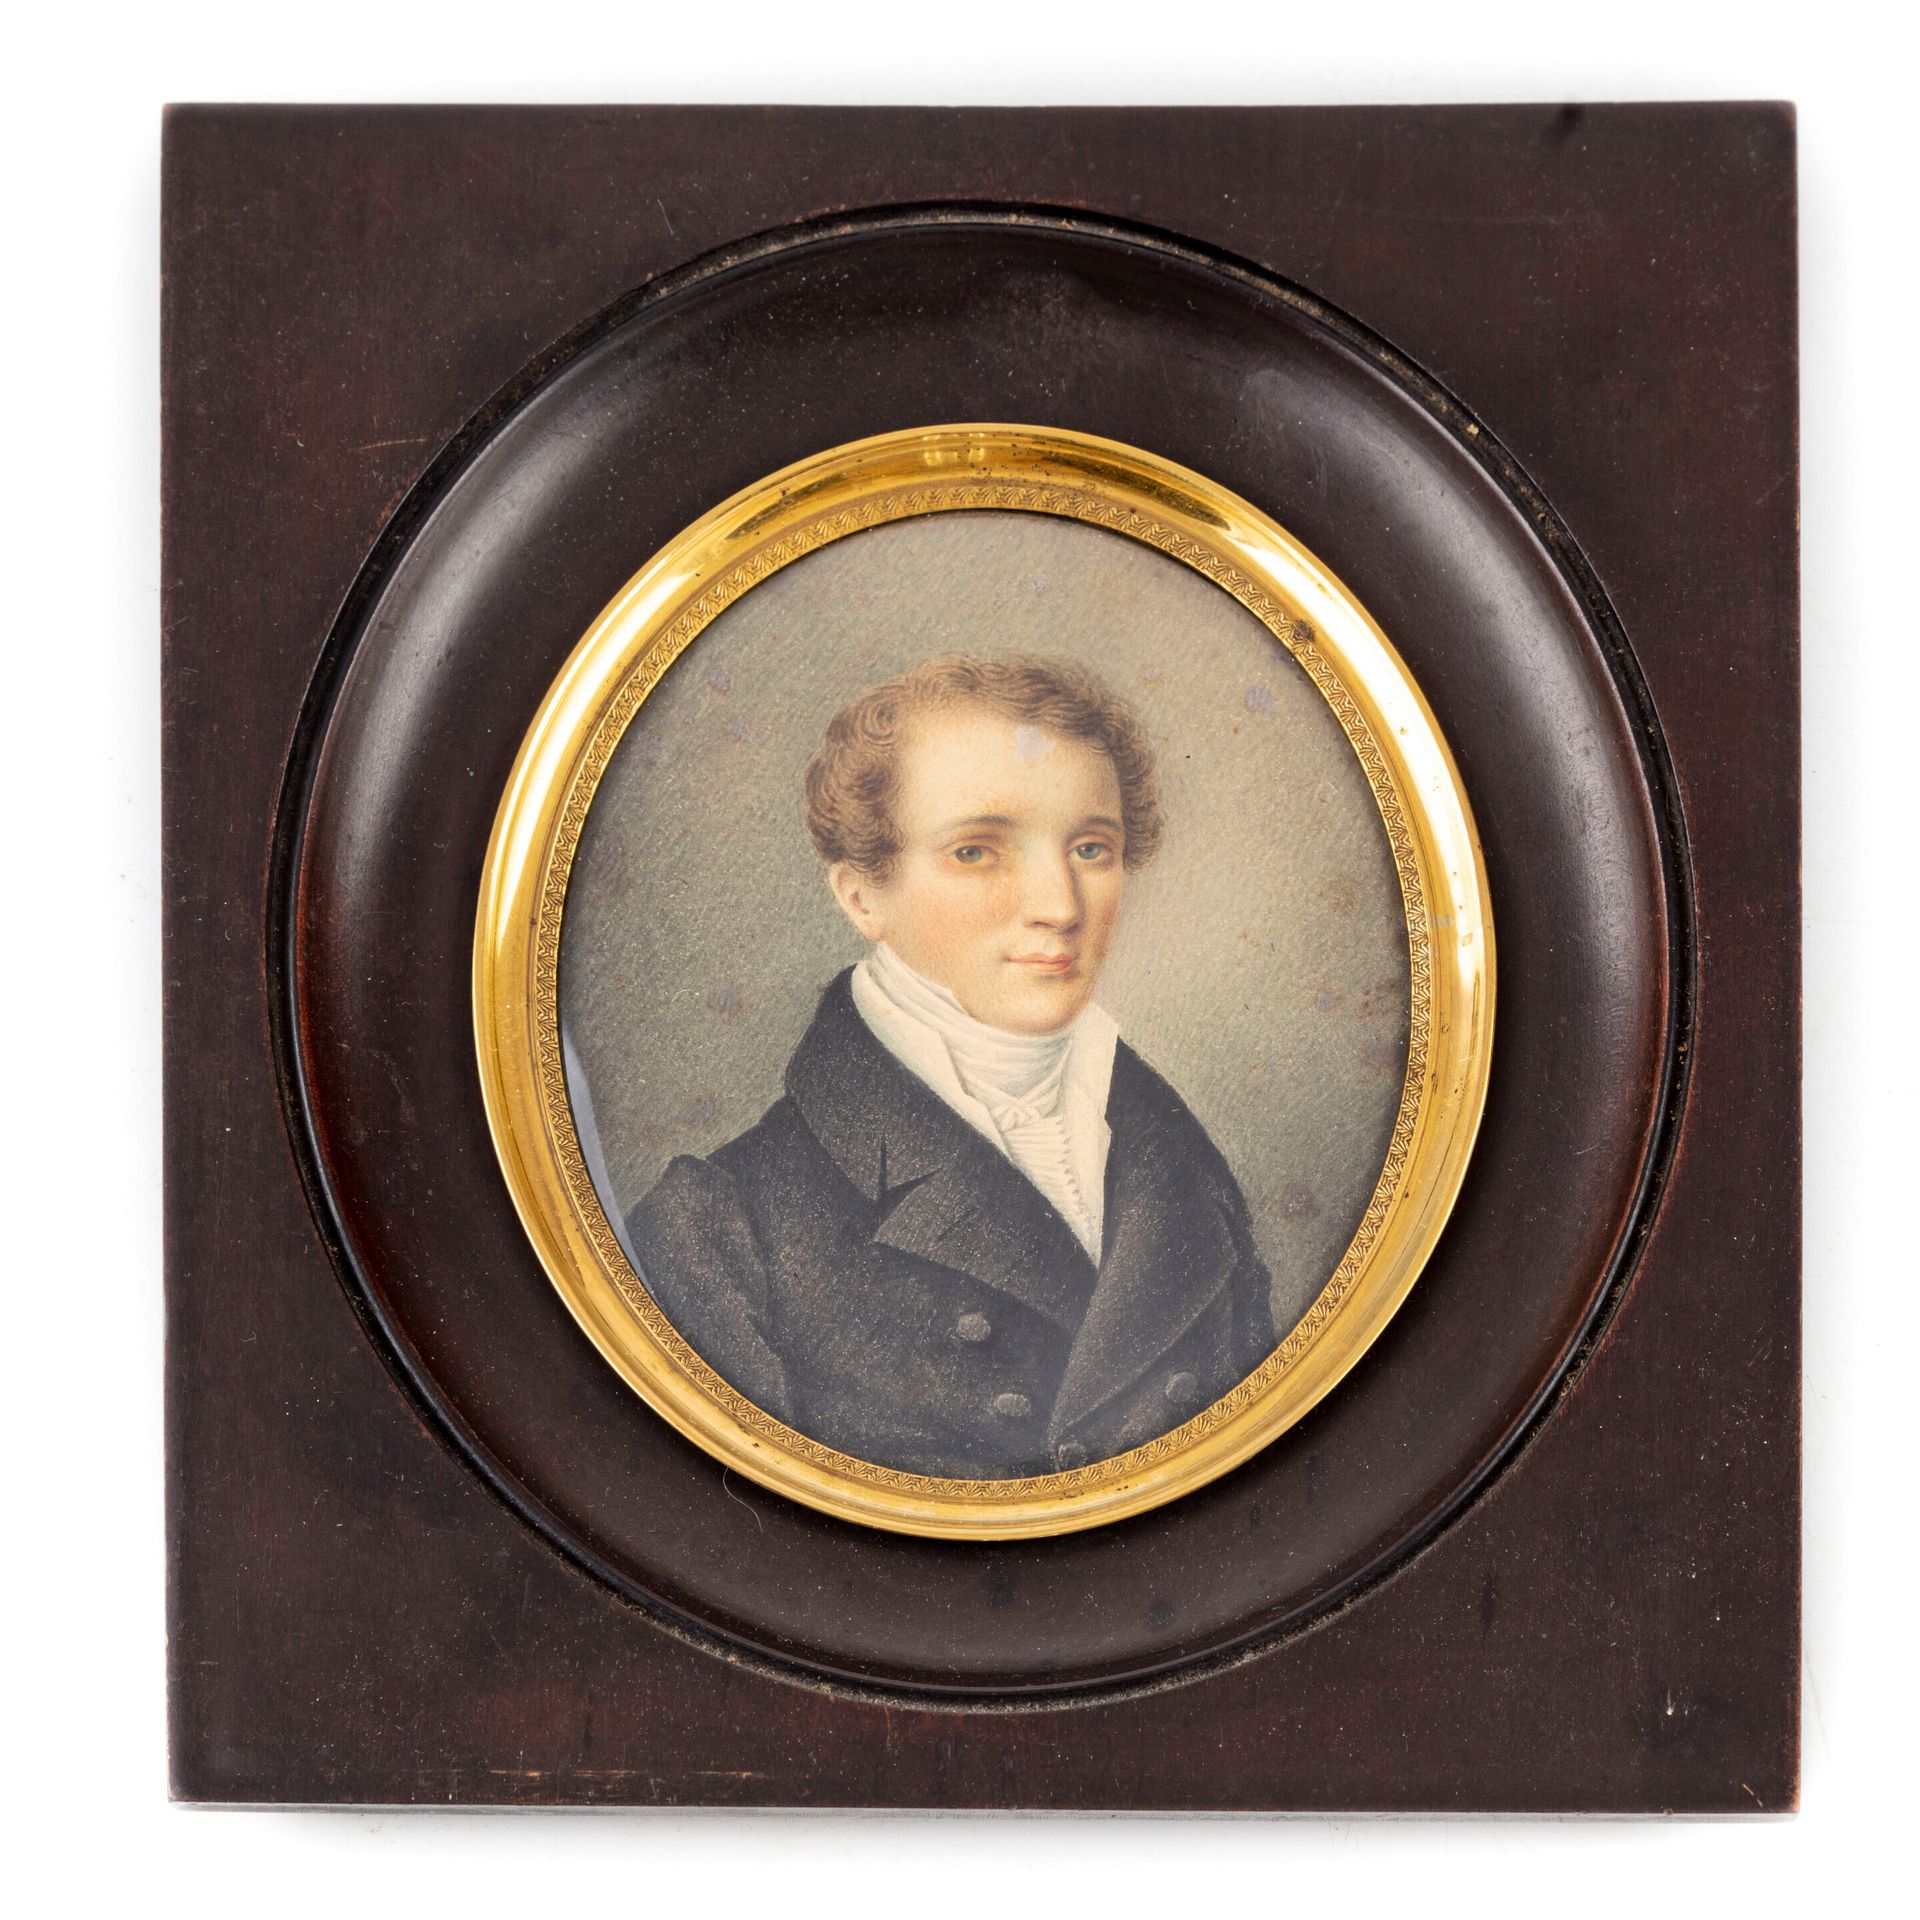 ECOLE FRANCAISE XIXè 法国学校 19世纪上半叶

穿着黑色夹克的男子肖像

椭圆形视图的水彩画

10 x 8 cm

有框

19世纪